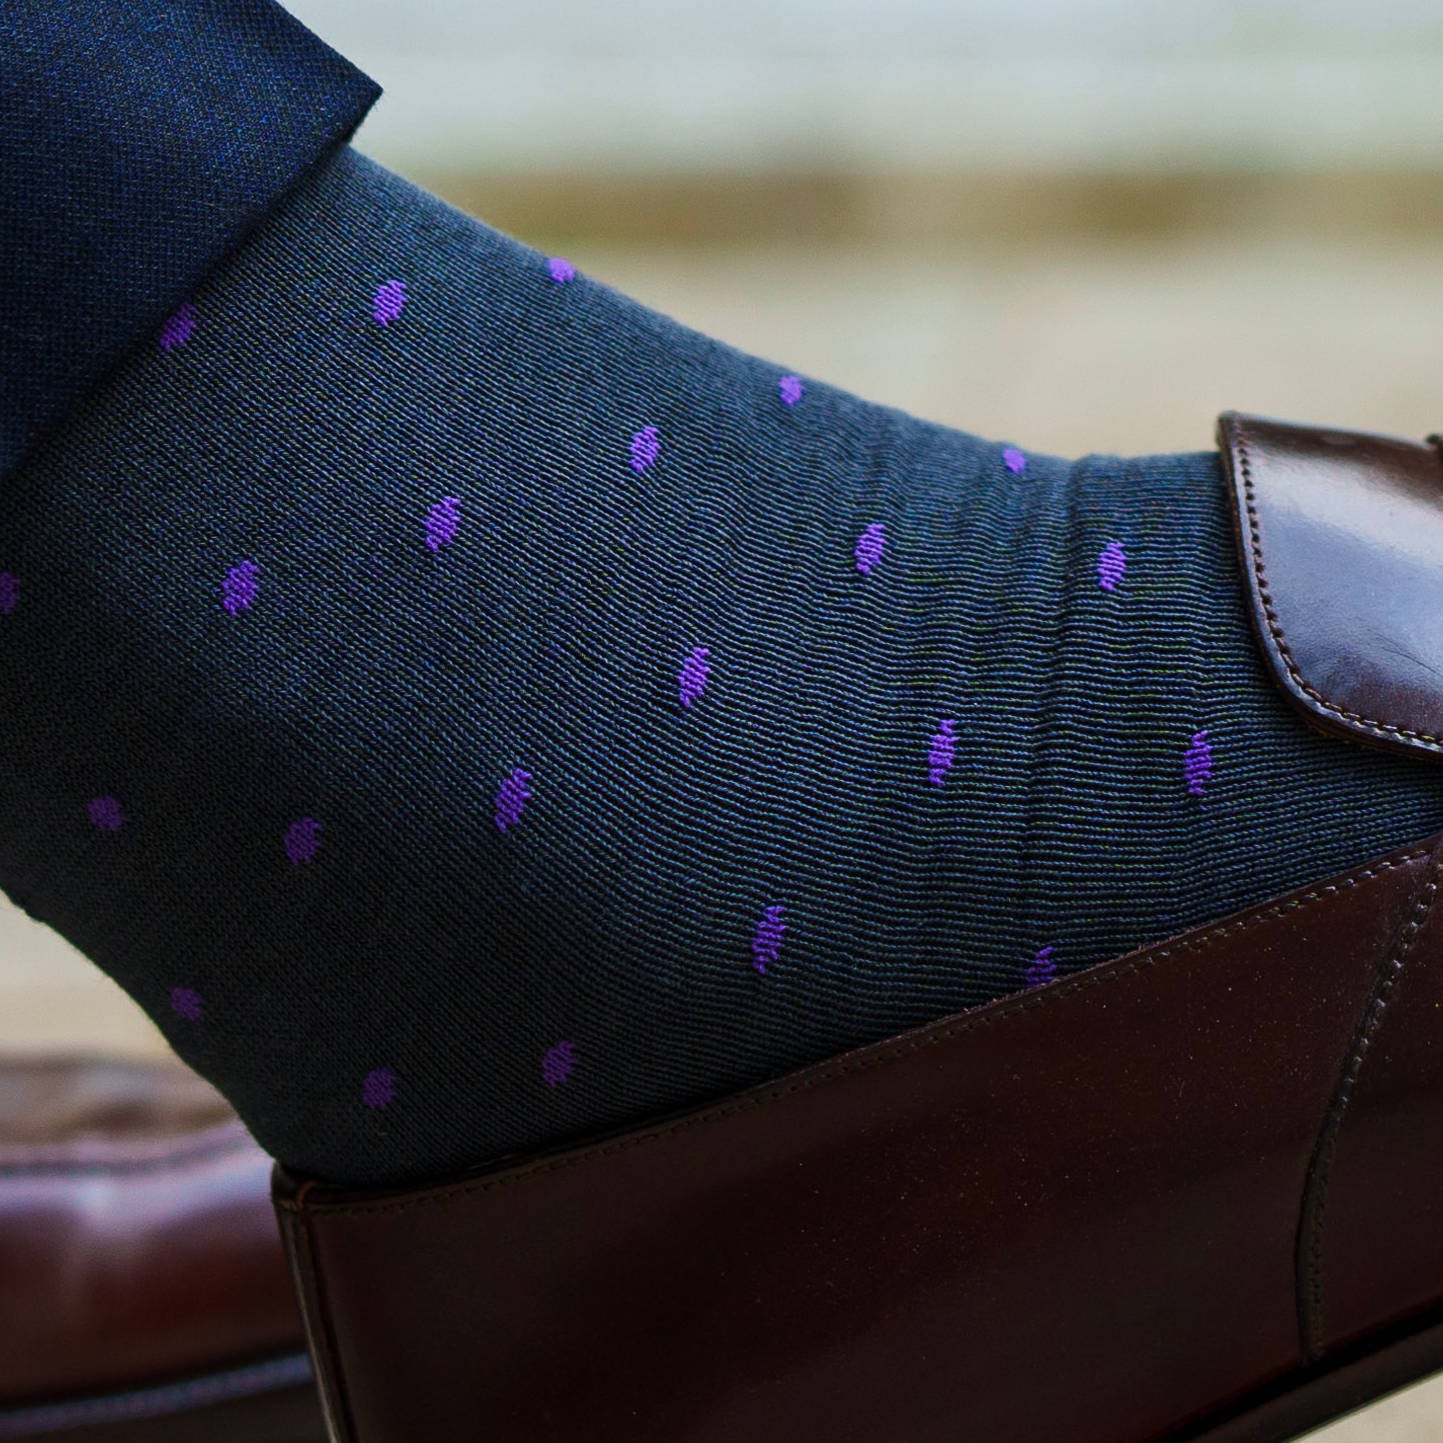 grey dress socks with light purple polka dots